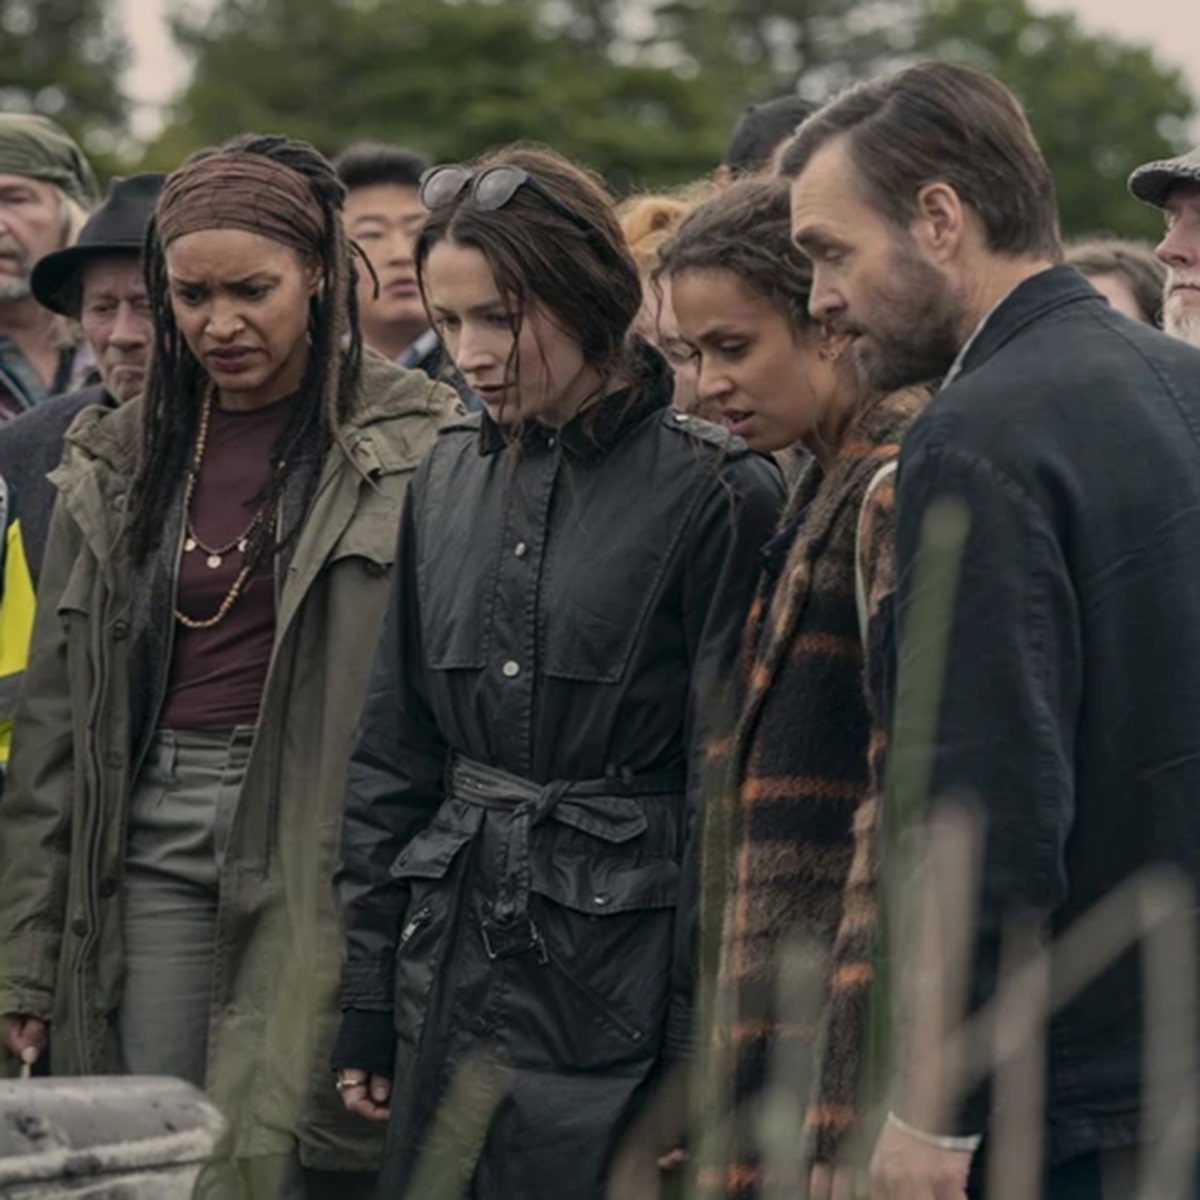 bodkin serie tv netflix irlanda thriller trama cast recensione trailer storia vera